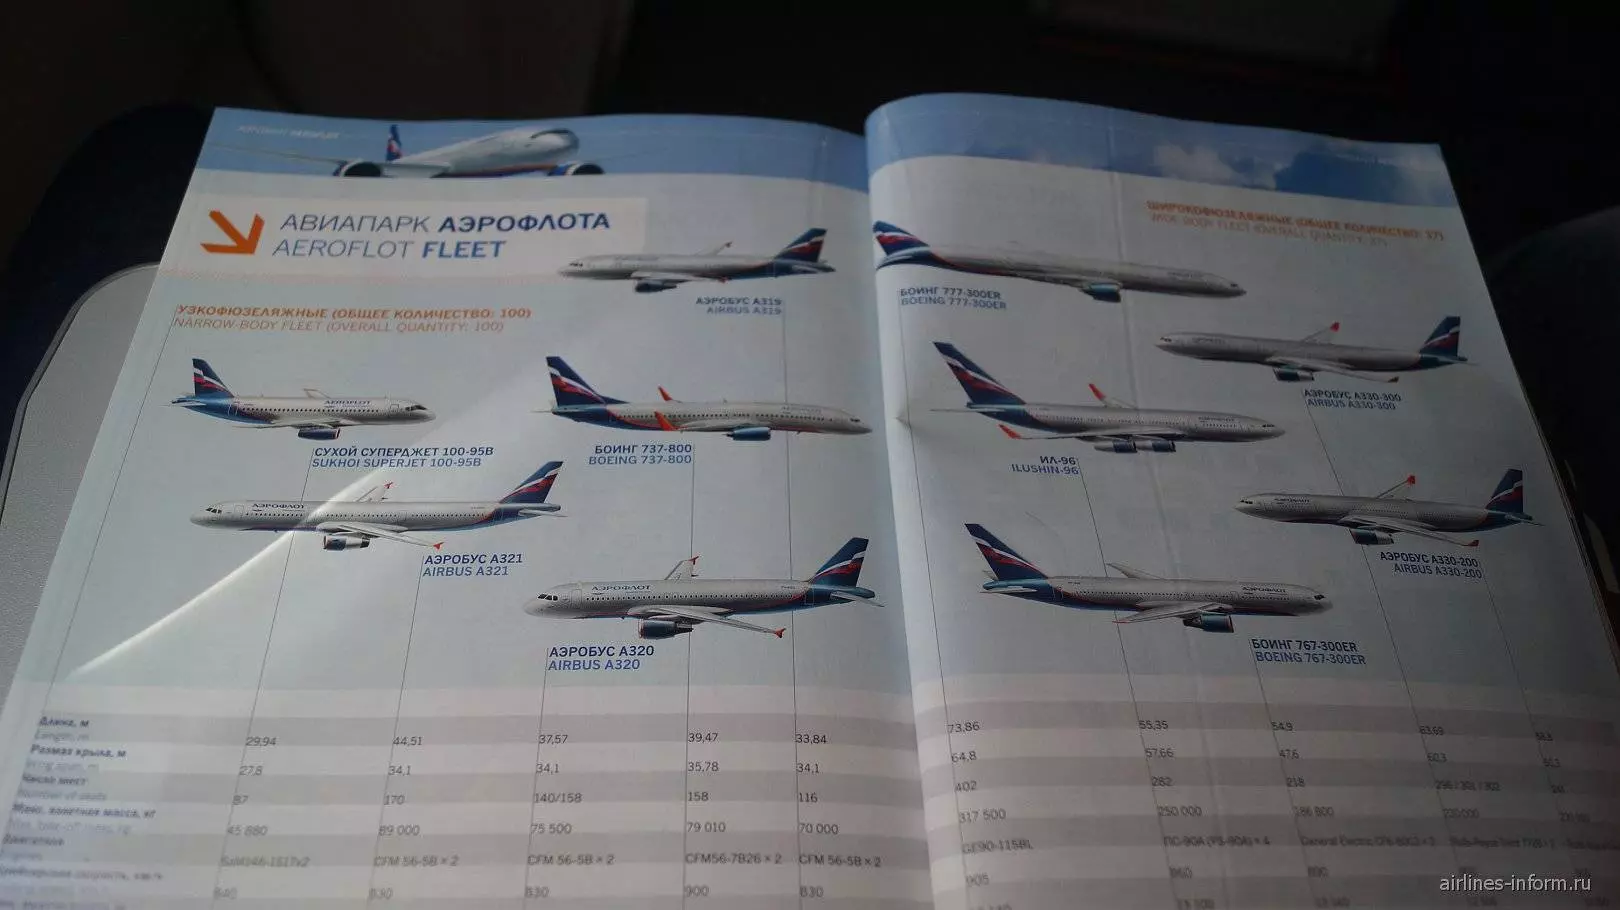 Схема салона boeing 737-800 s7 airlines. лучшие места в самолете